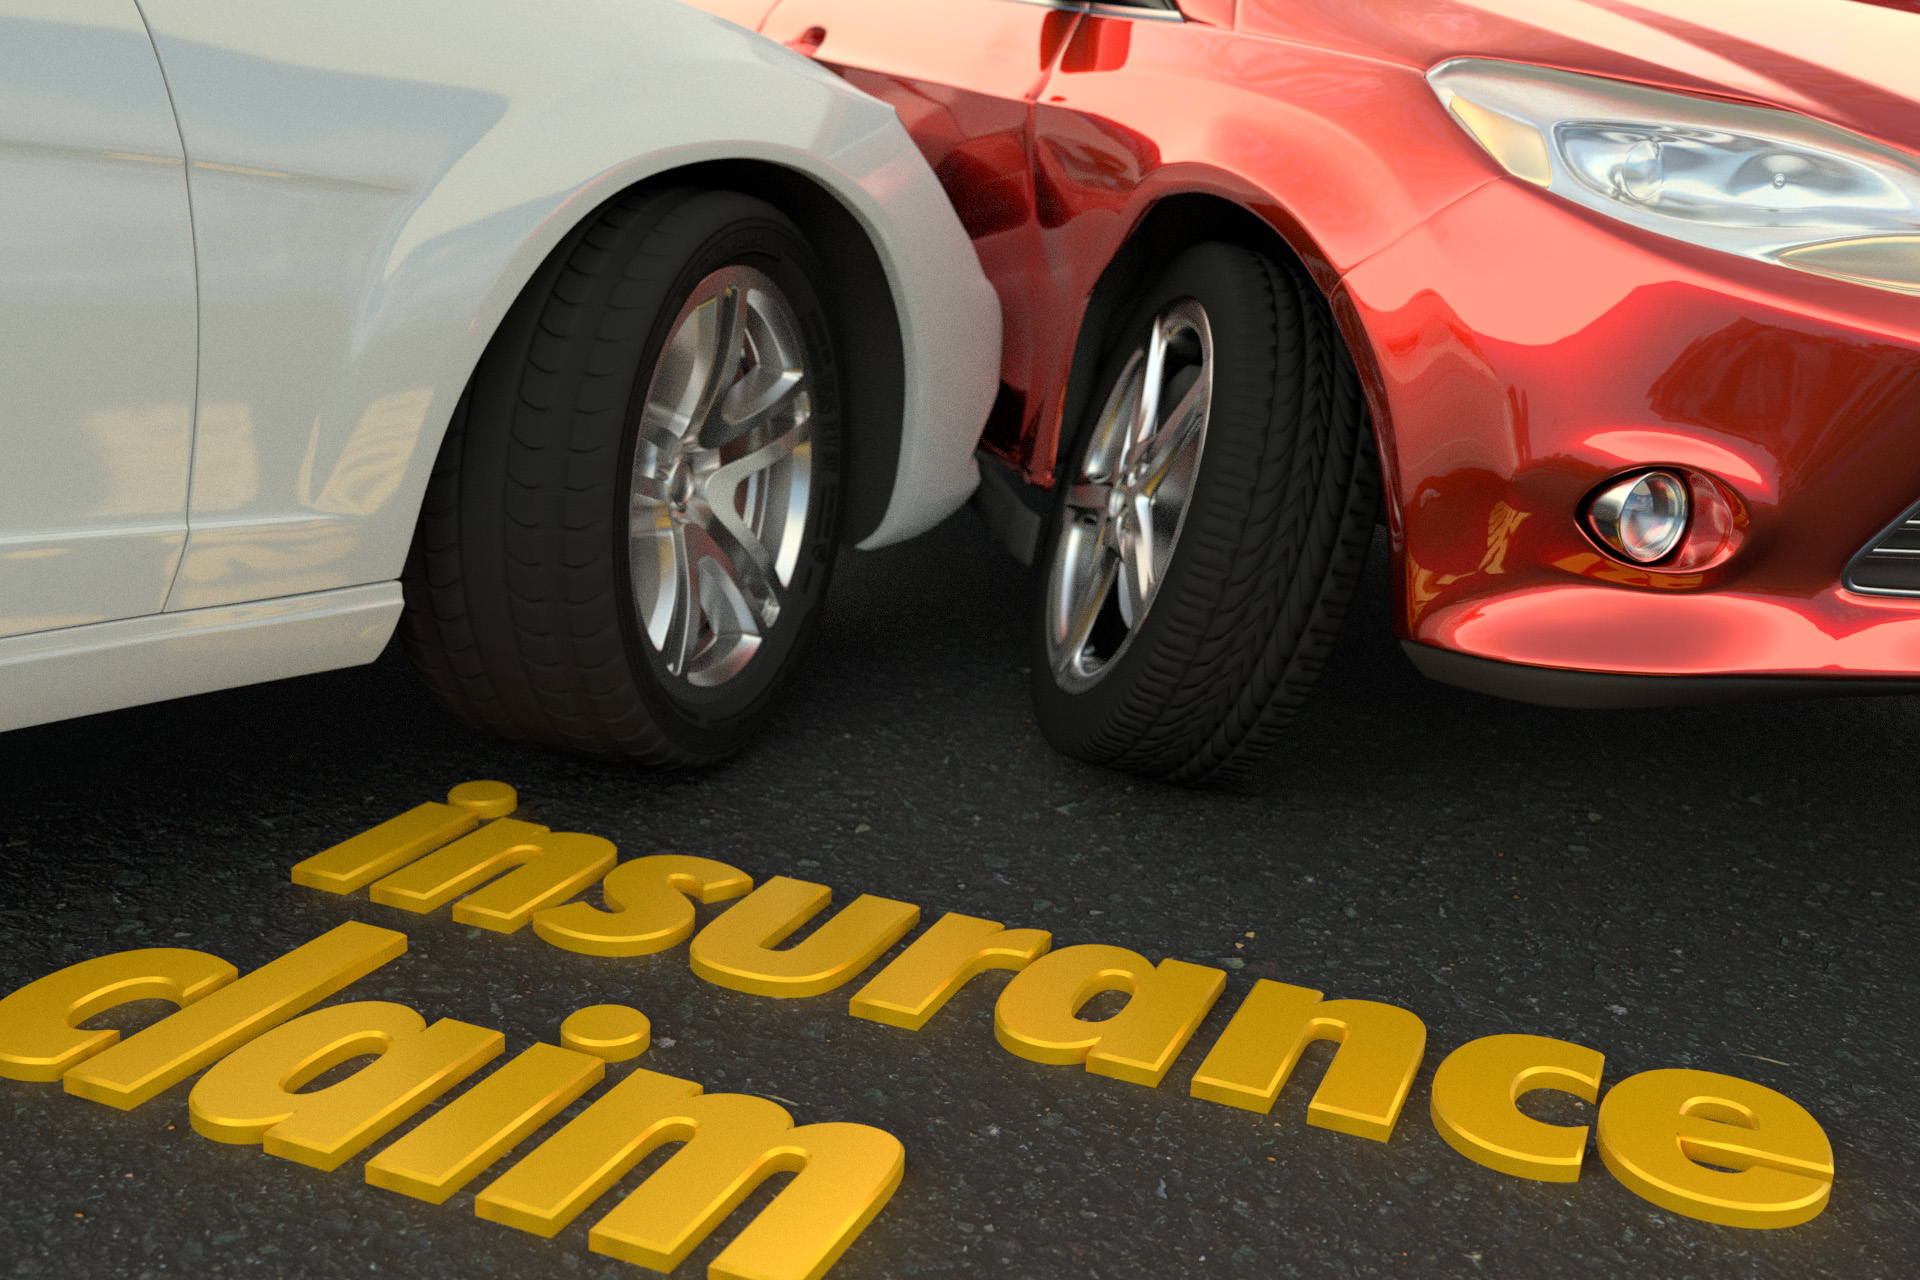 Car insurance claim free image download